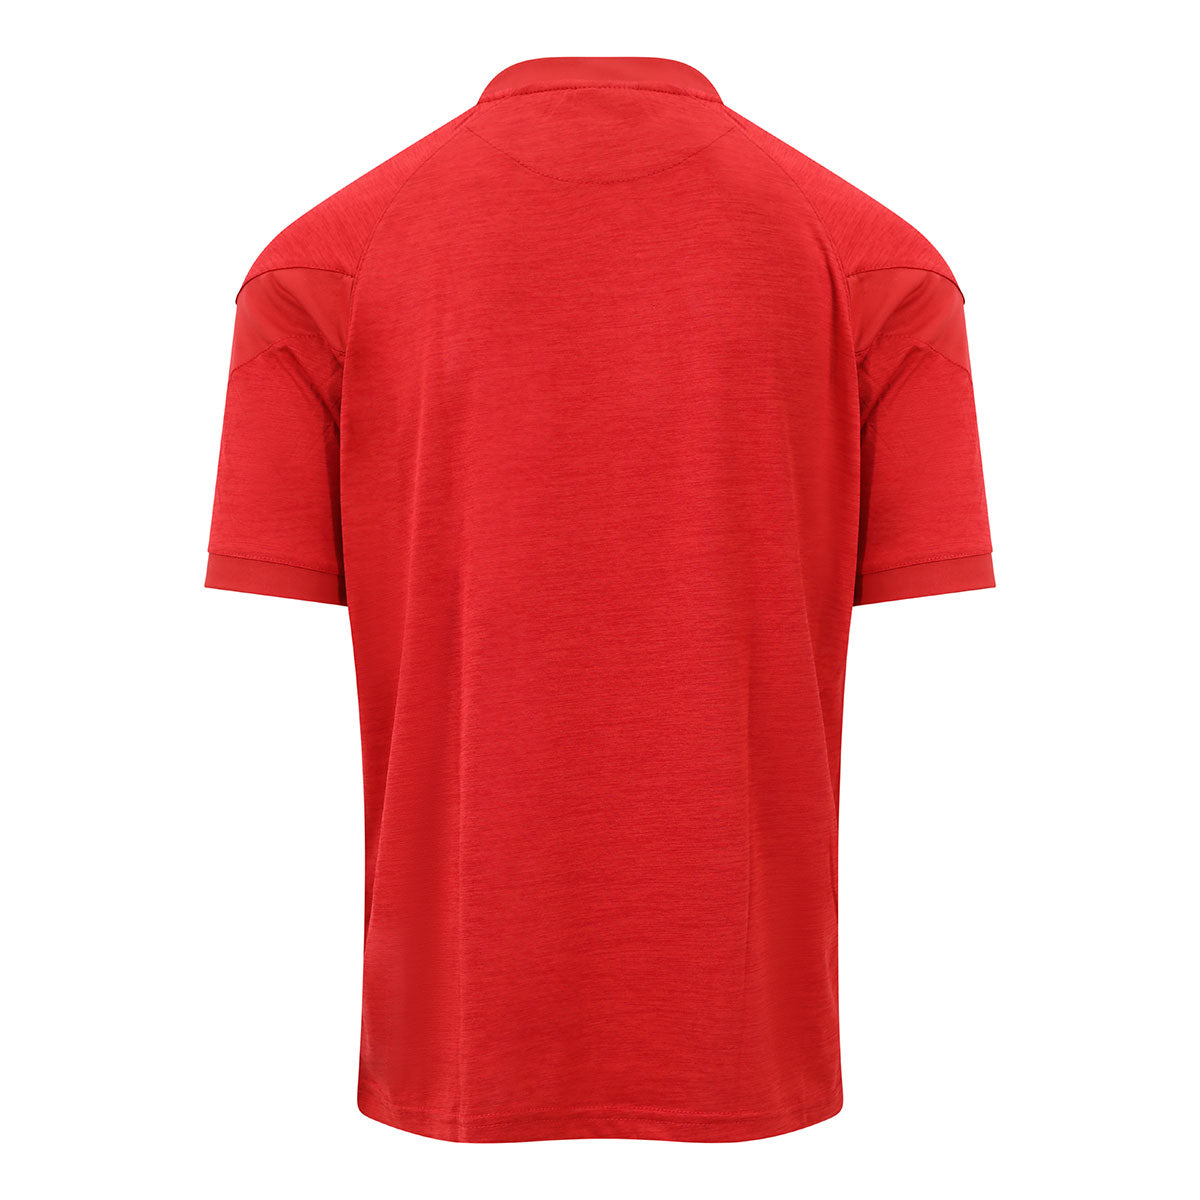 Mc Keever Ballingeary GAA Core 22 T-Shirt - Youth - Red